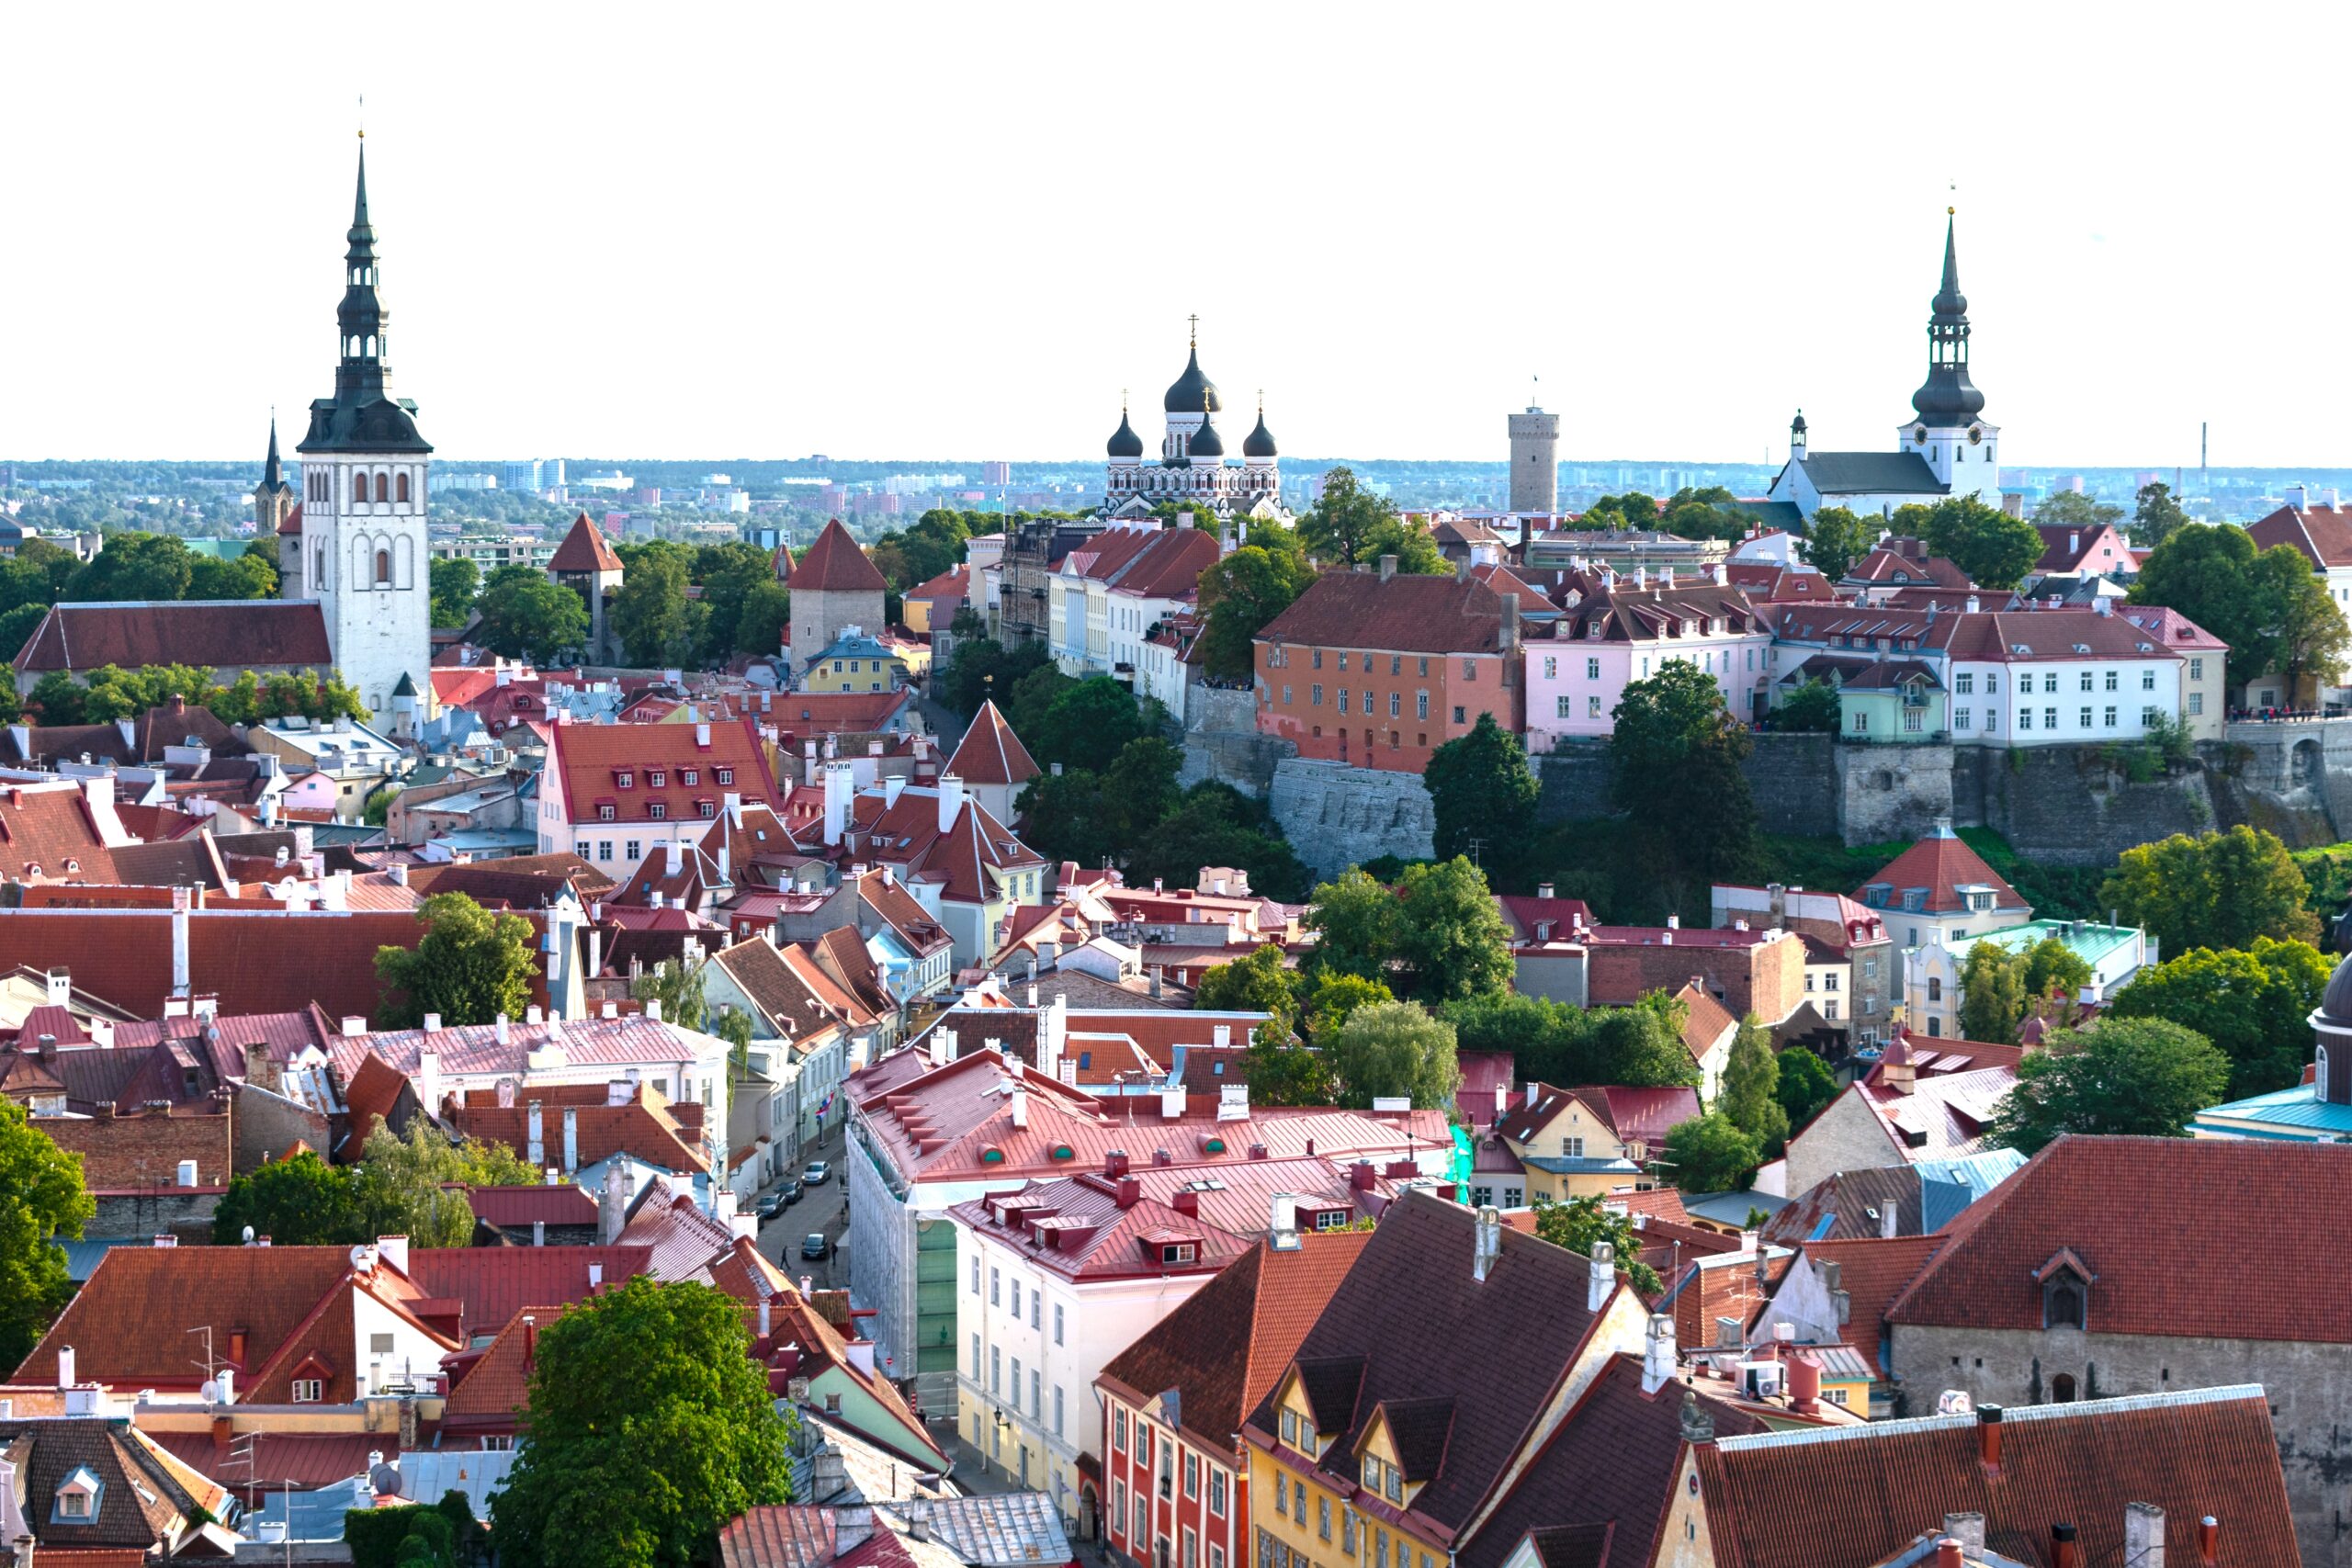 Tallinn, Estonia (Photo Credit: Kevin McMahon on Unsplash)